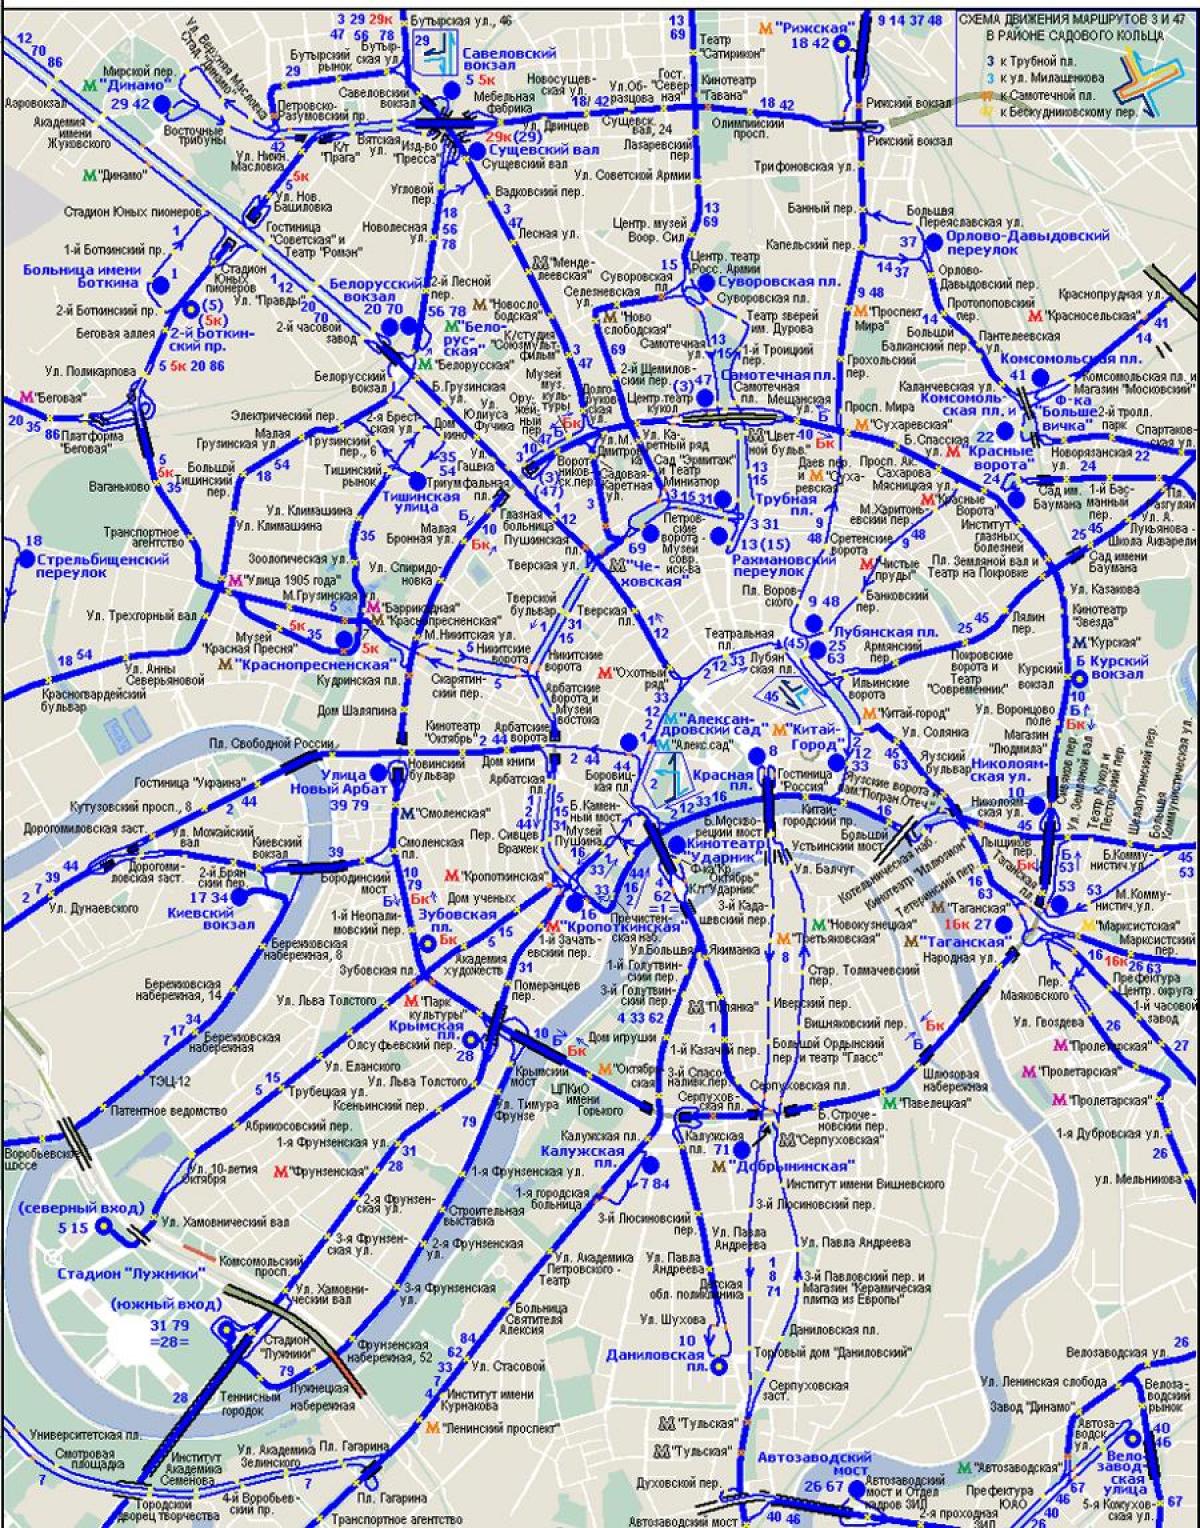 kort over Moskva trolleybus